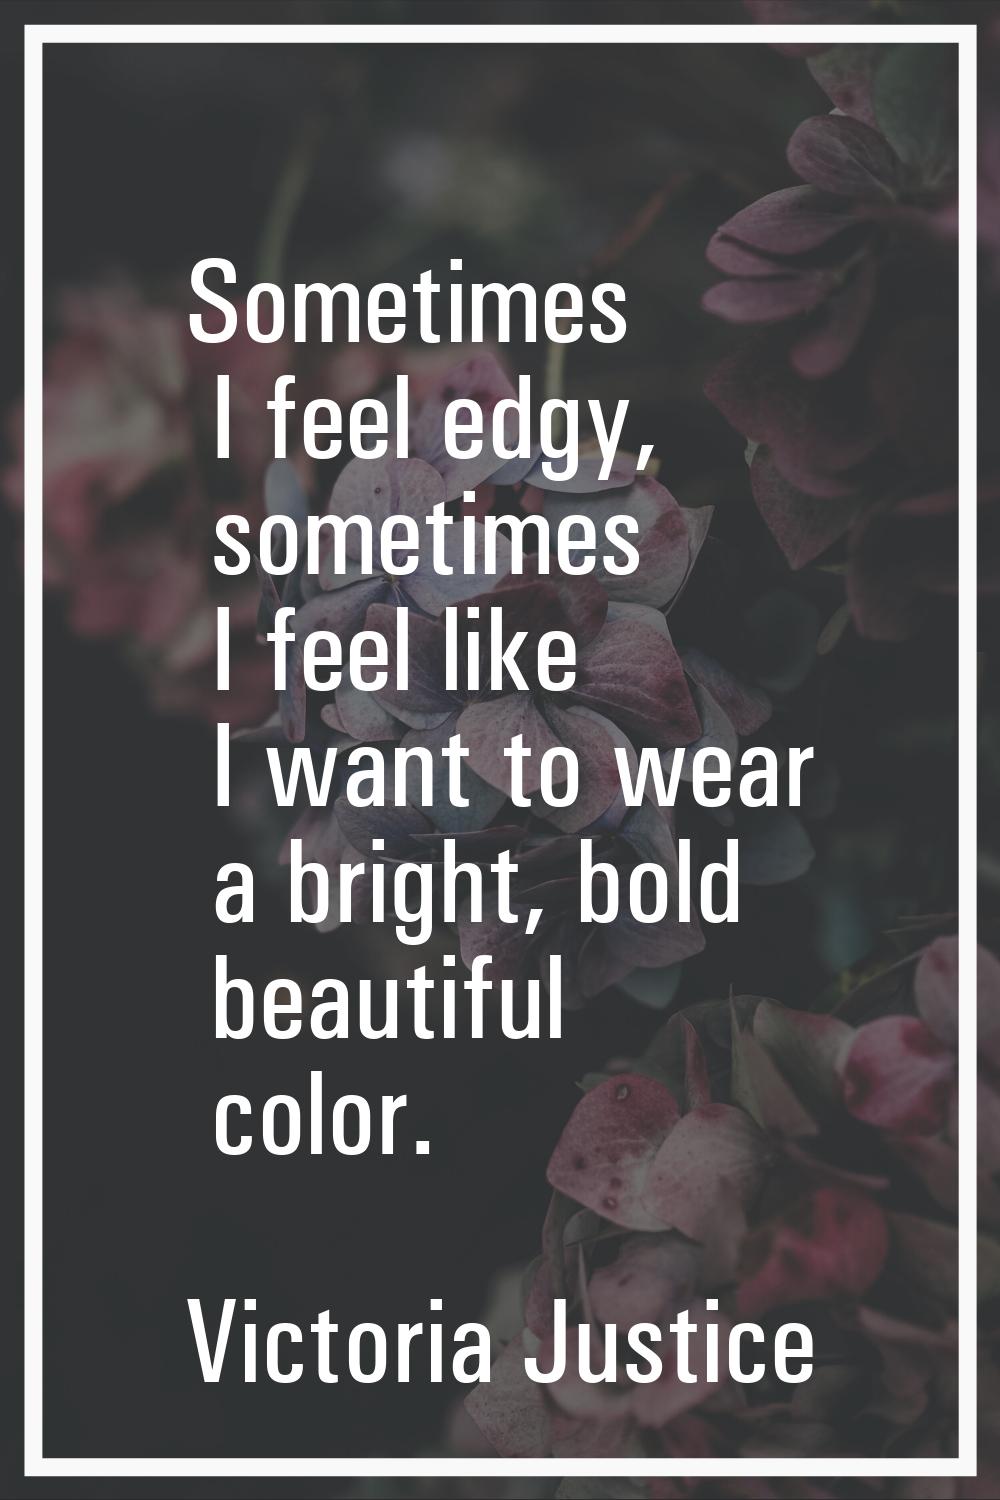 Sometimes I feel edgy, sometimes I feel like I want to wear a bright, bold beautiful color.